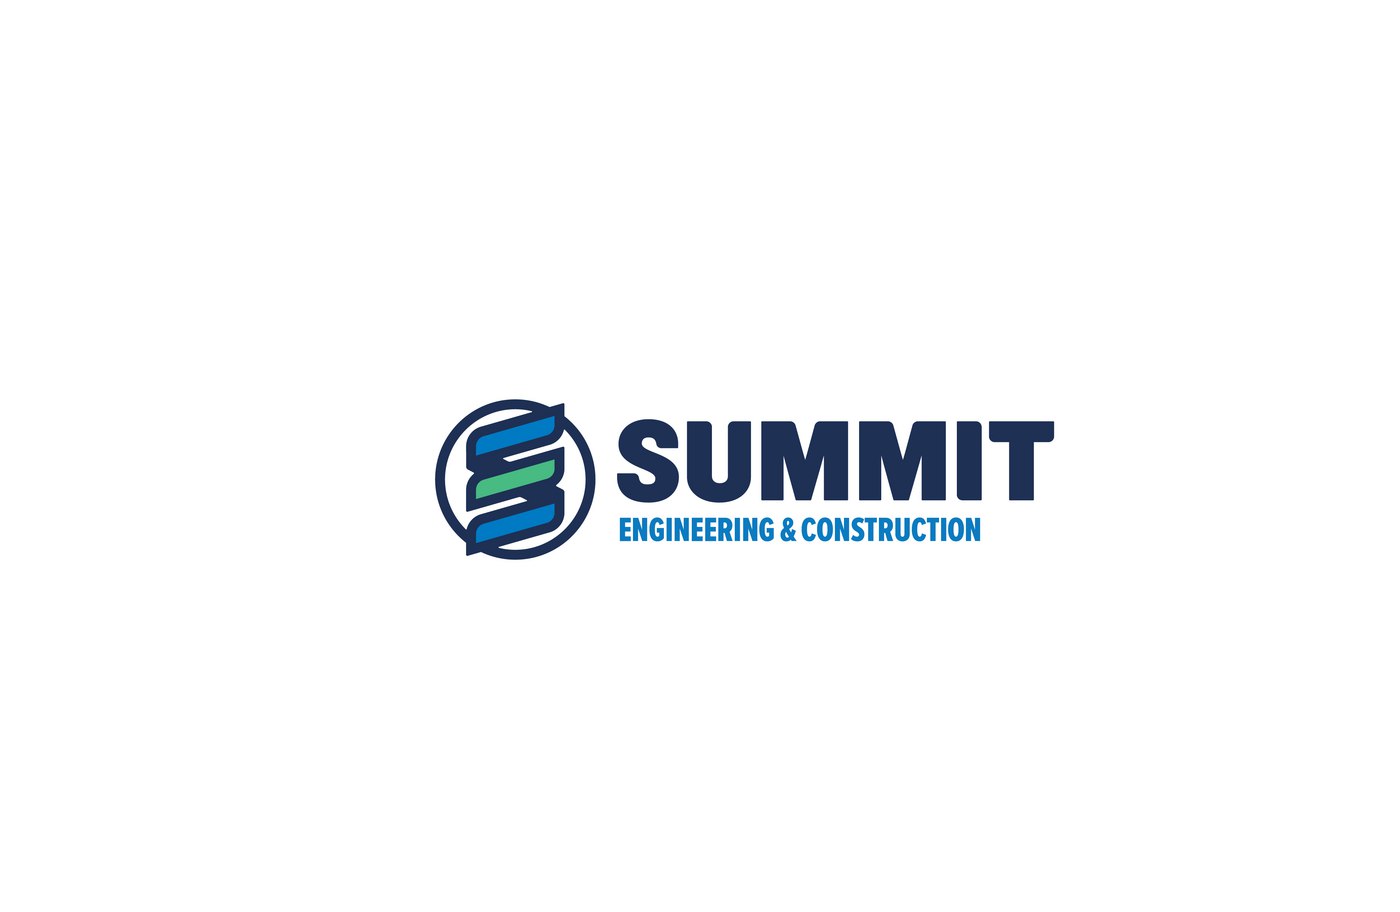 Summit_About Us_Summit Engineering & Construction-01